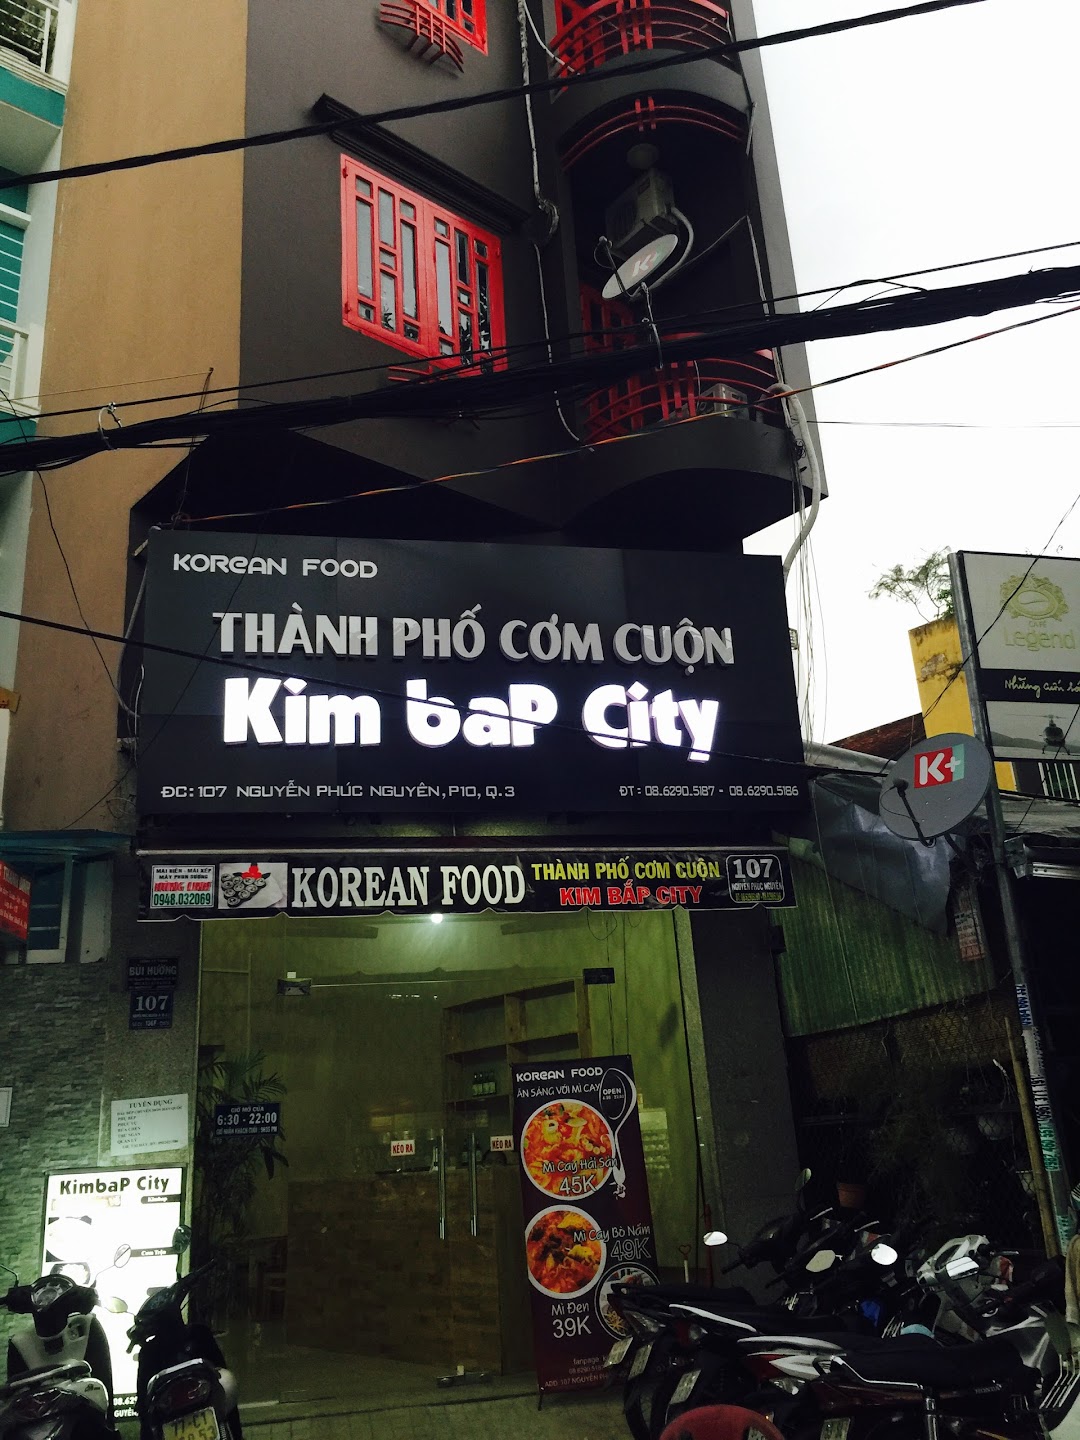 Kimbap City